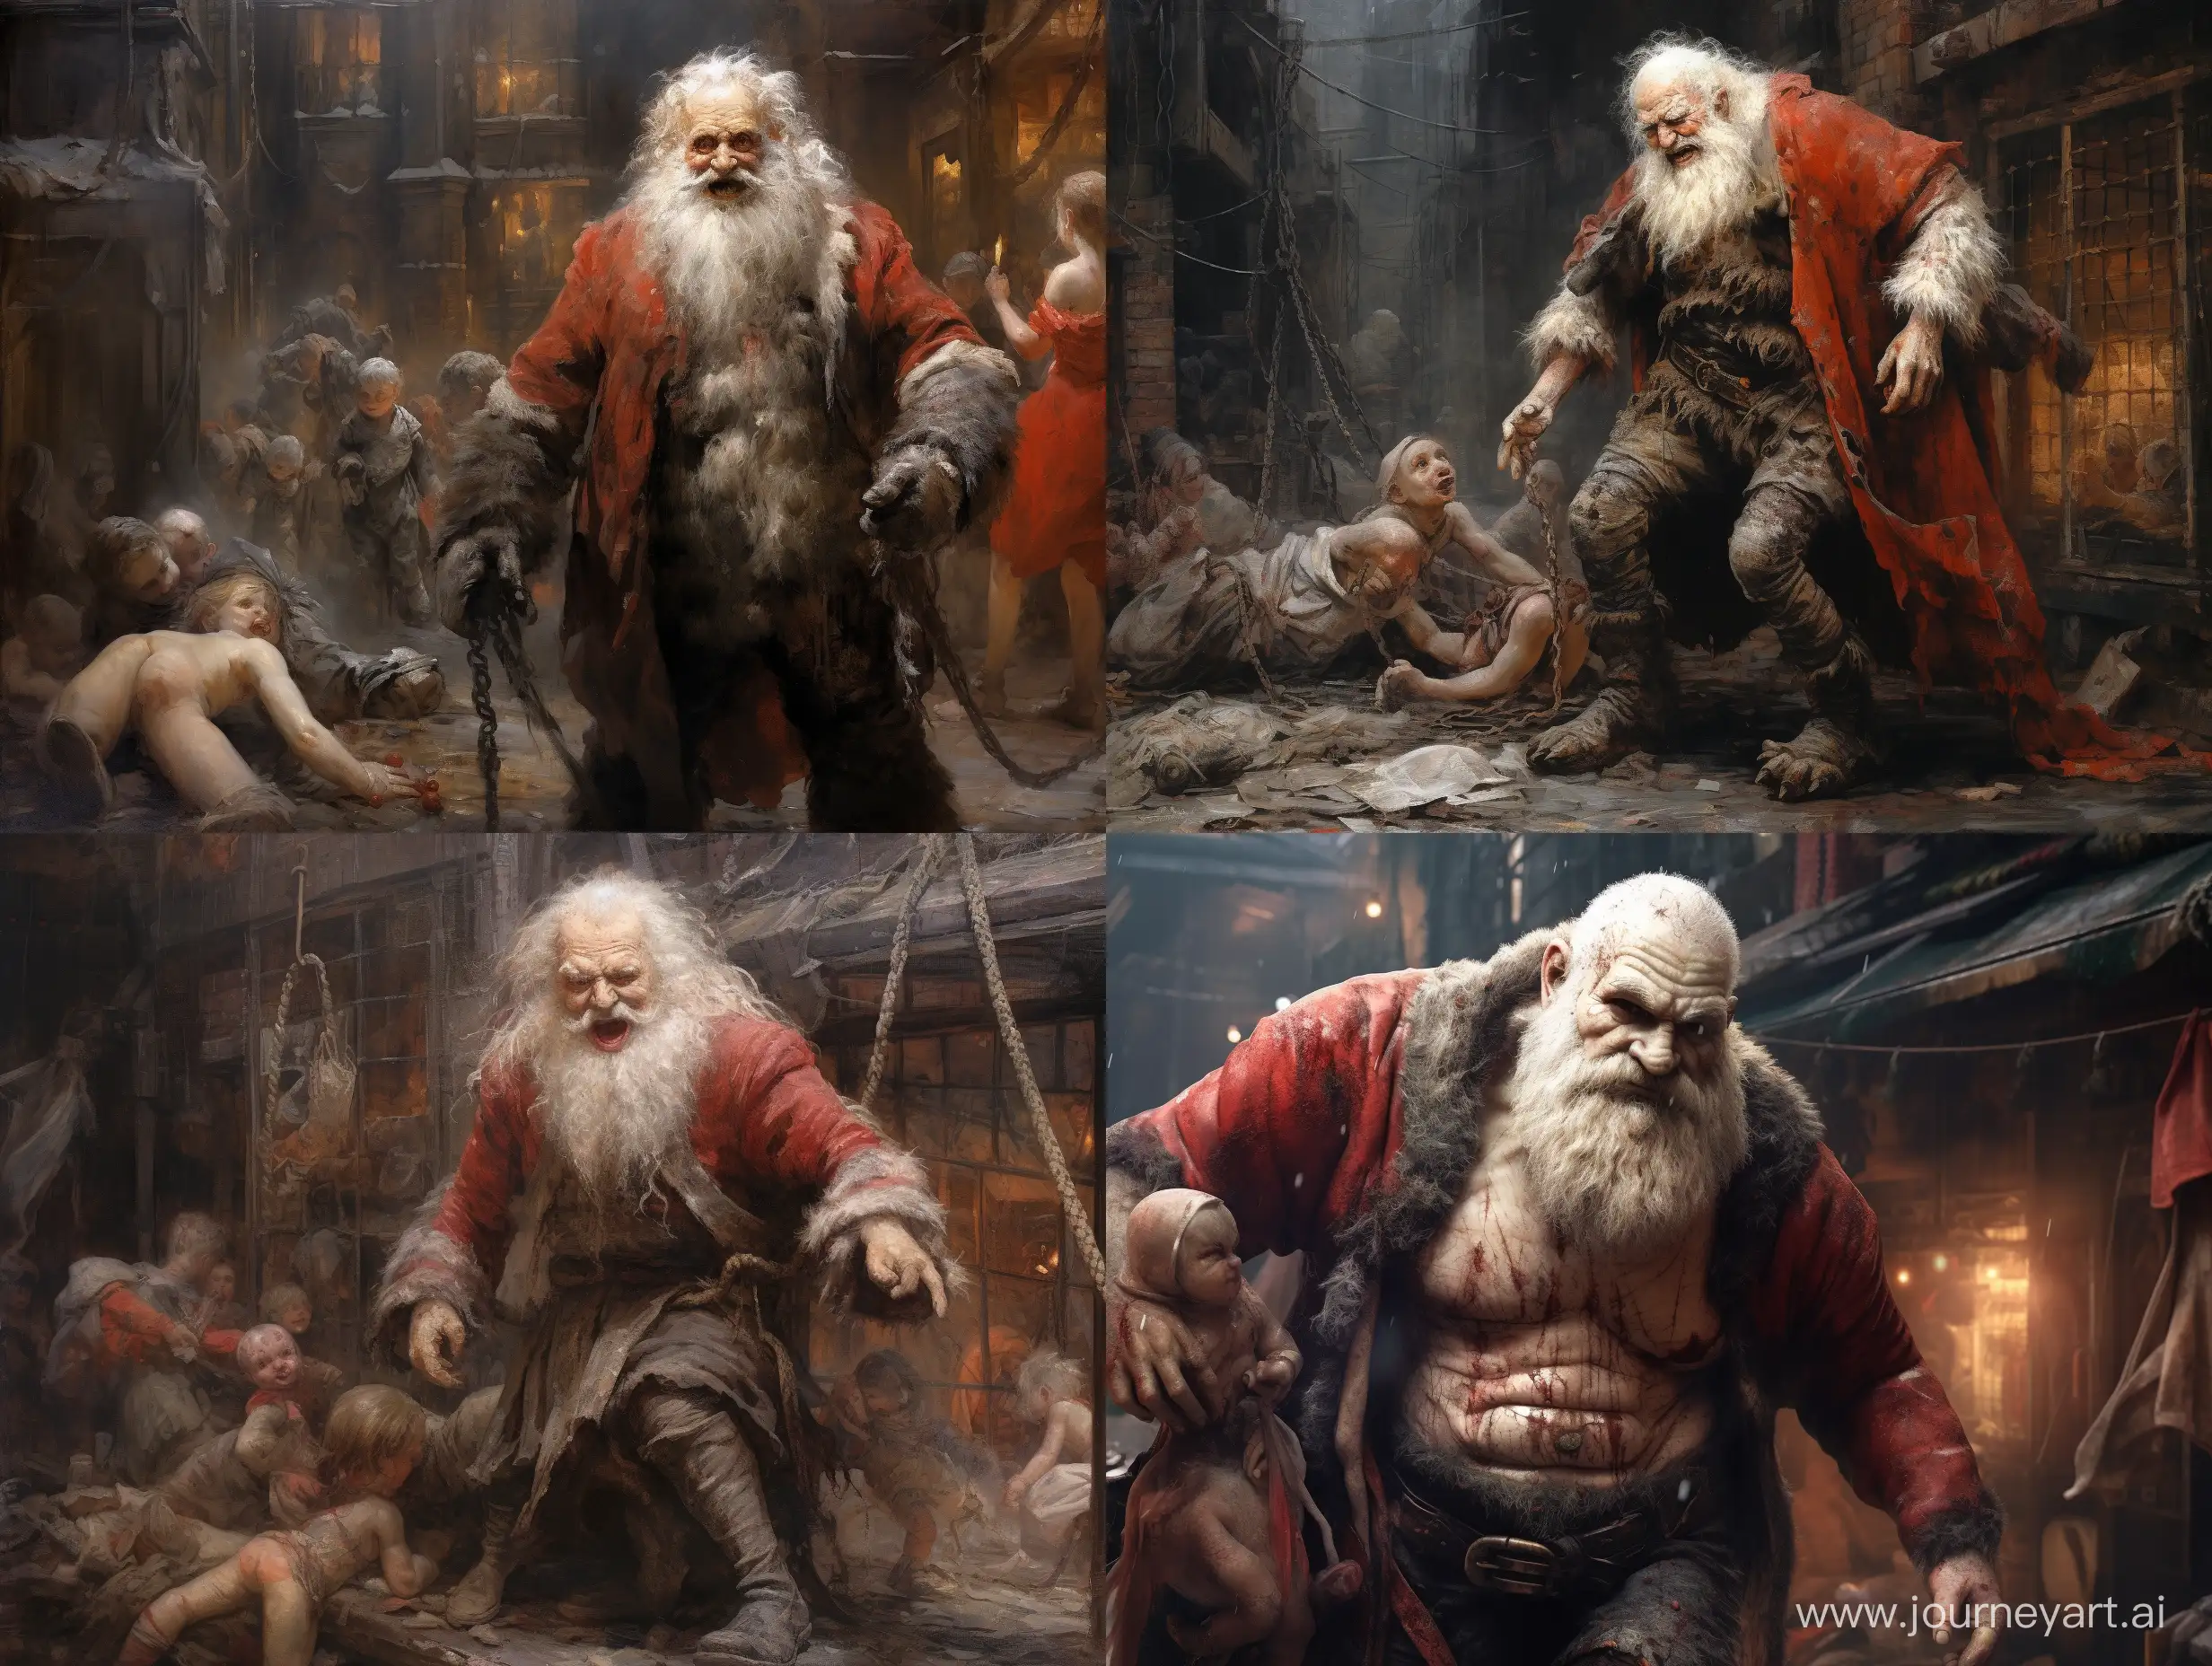 Disturbing-Scene-Tormented-Boy-and-Cruel-Santa-Claus-in-Gloomy-Medieval-Style